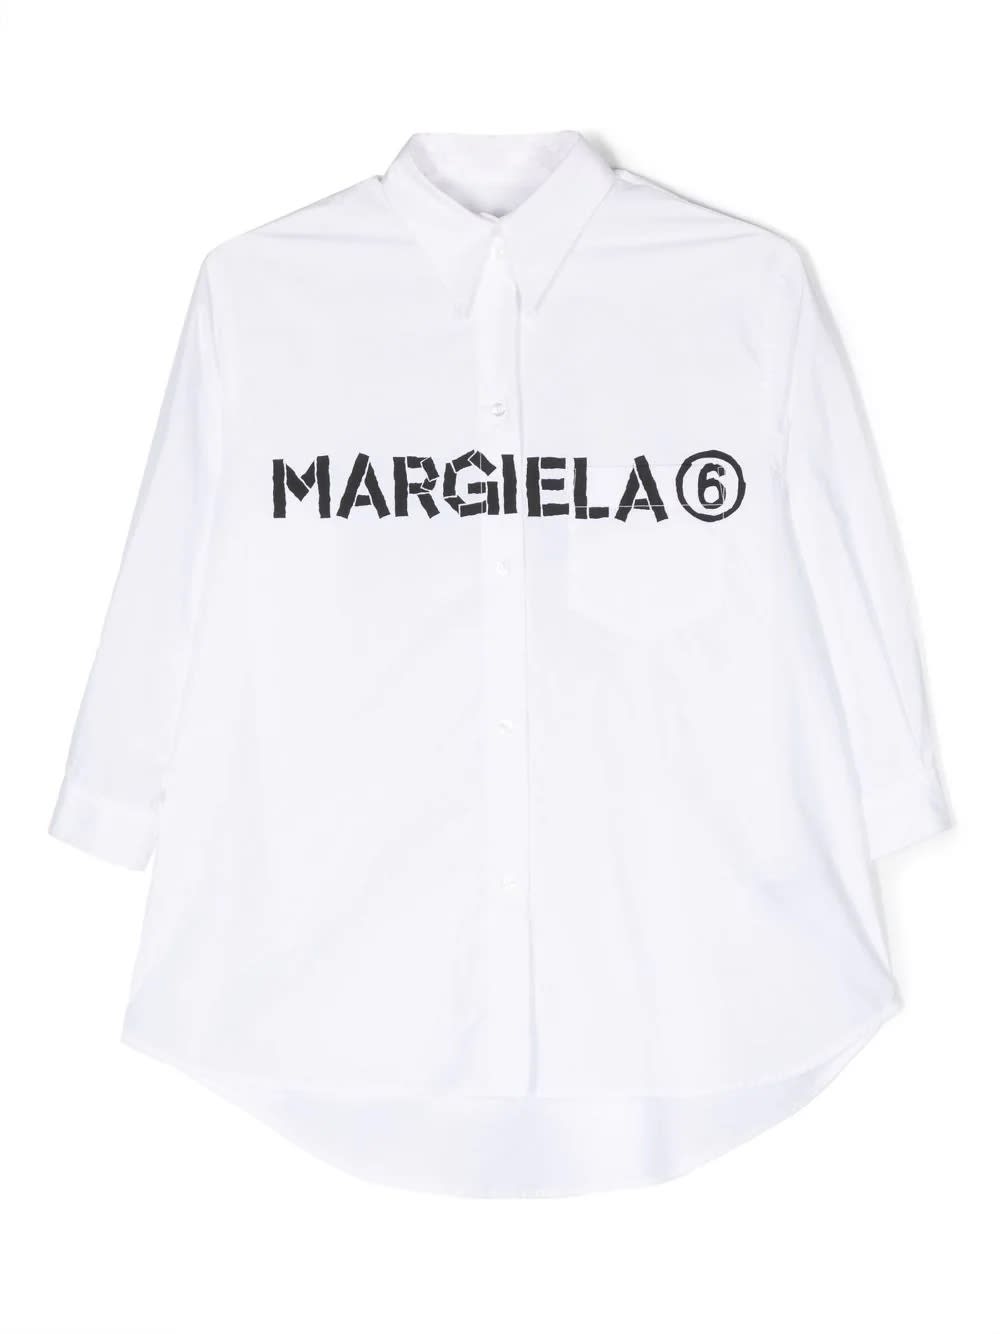 MM6 MAISON MARGIELA DRESS WITH PRINT